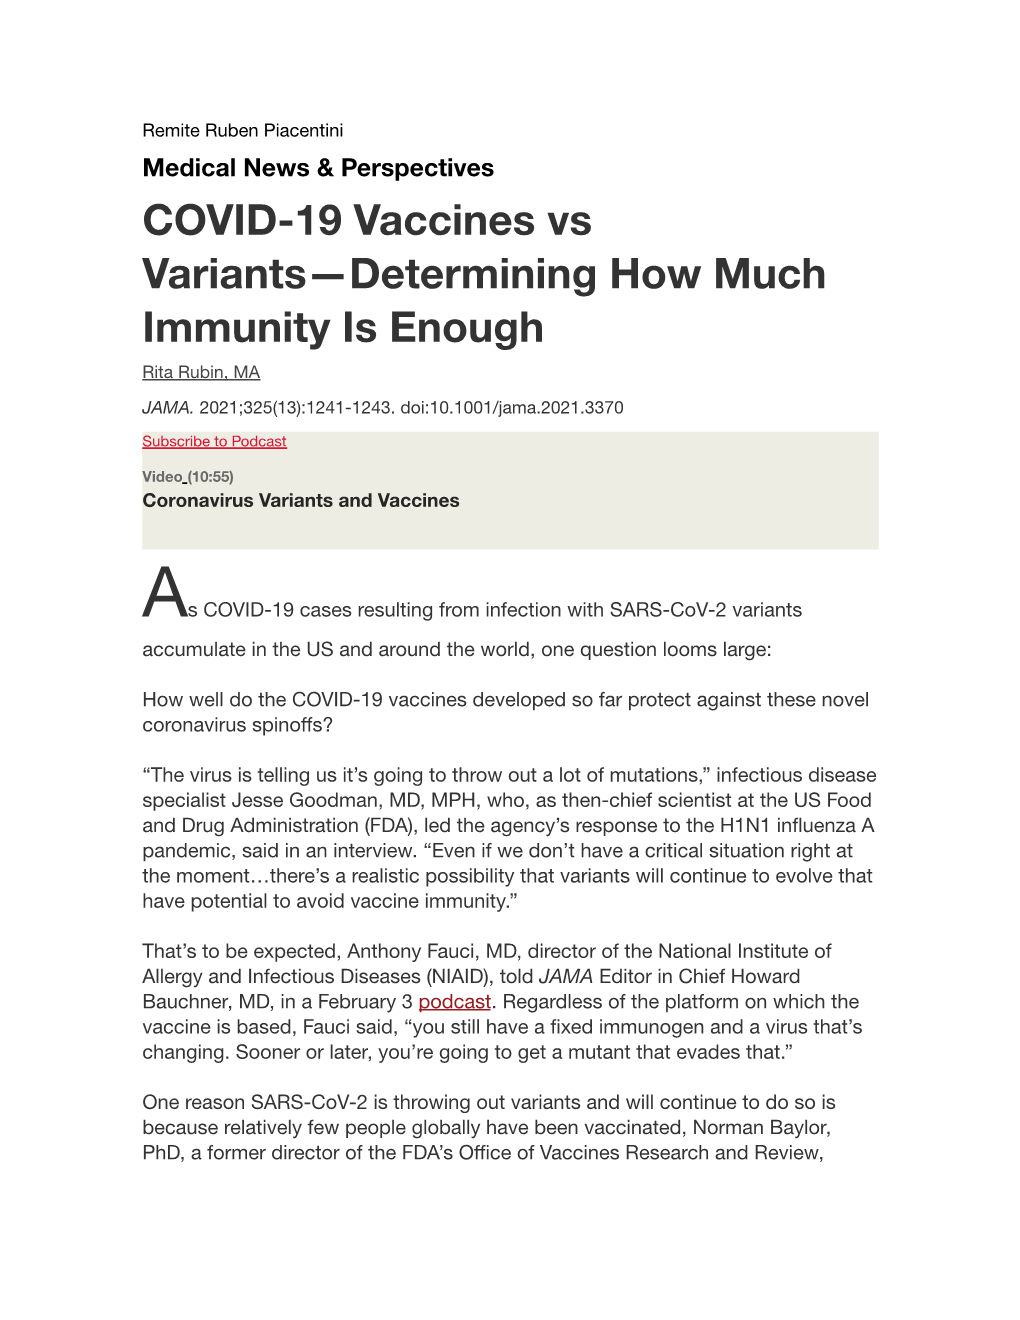 COVID-19 Vaccines Vs Variants.Docx